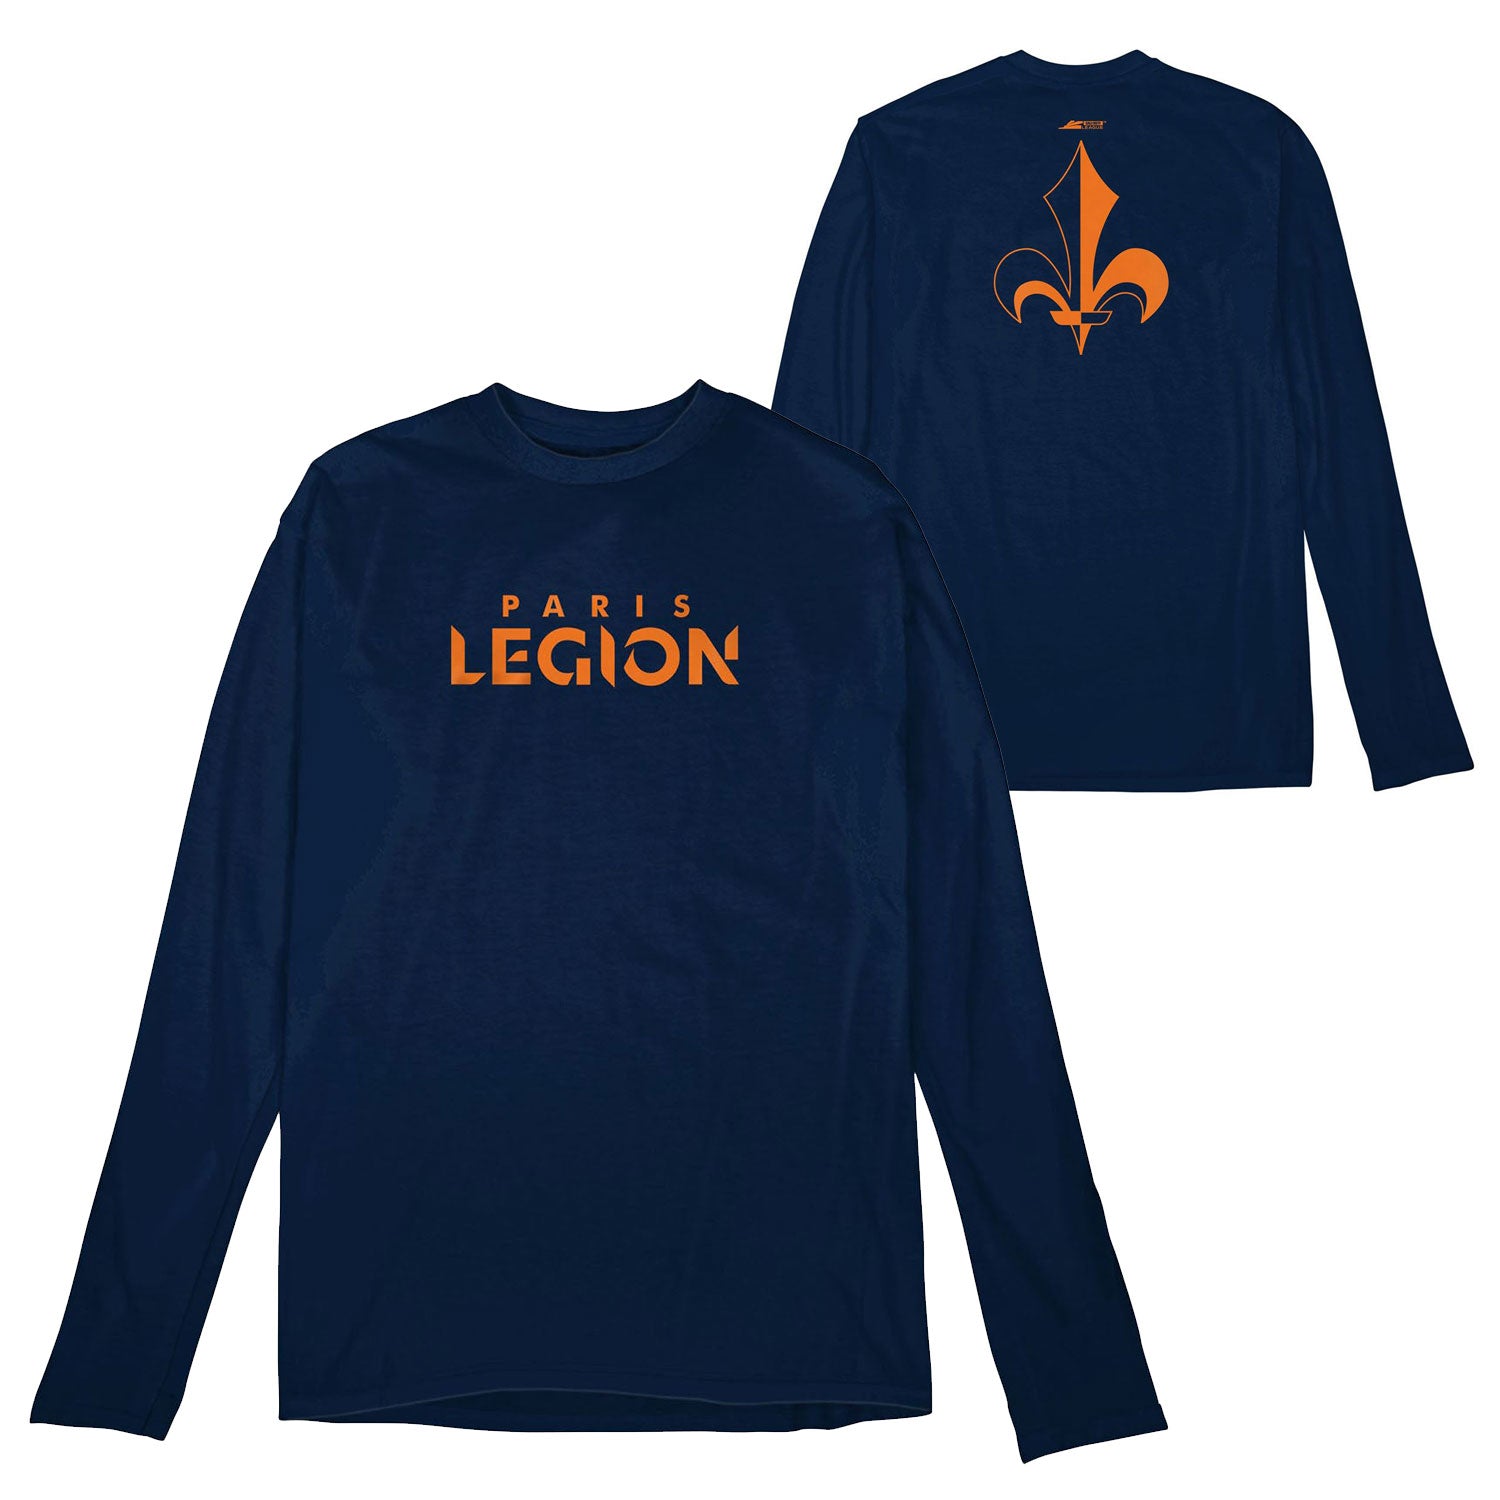 Paris Legion Signature Logo Navy Long Sleeve T-Shirt - front and back views